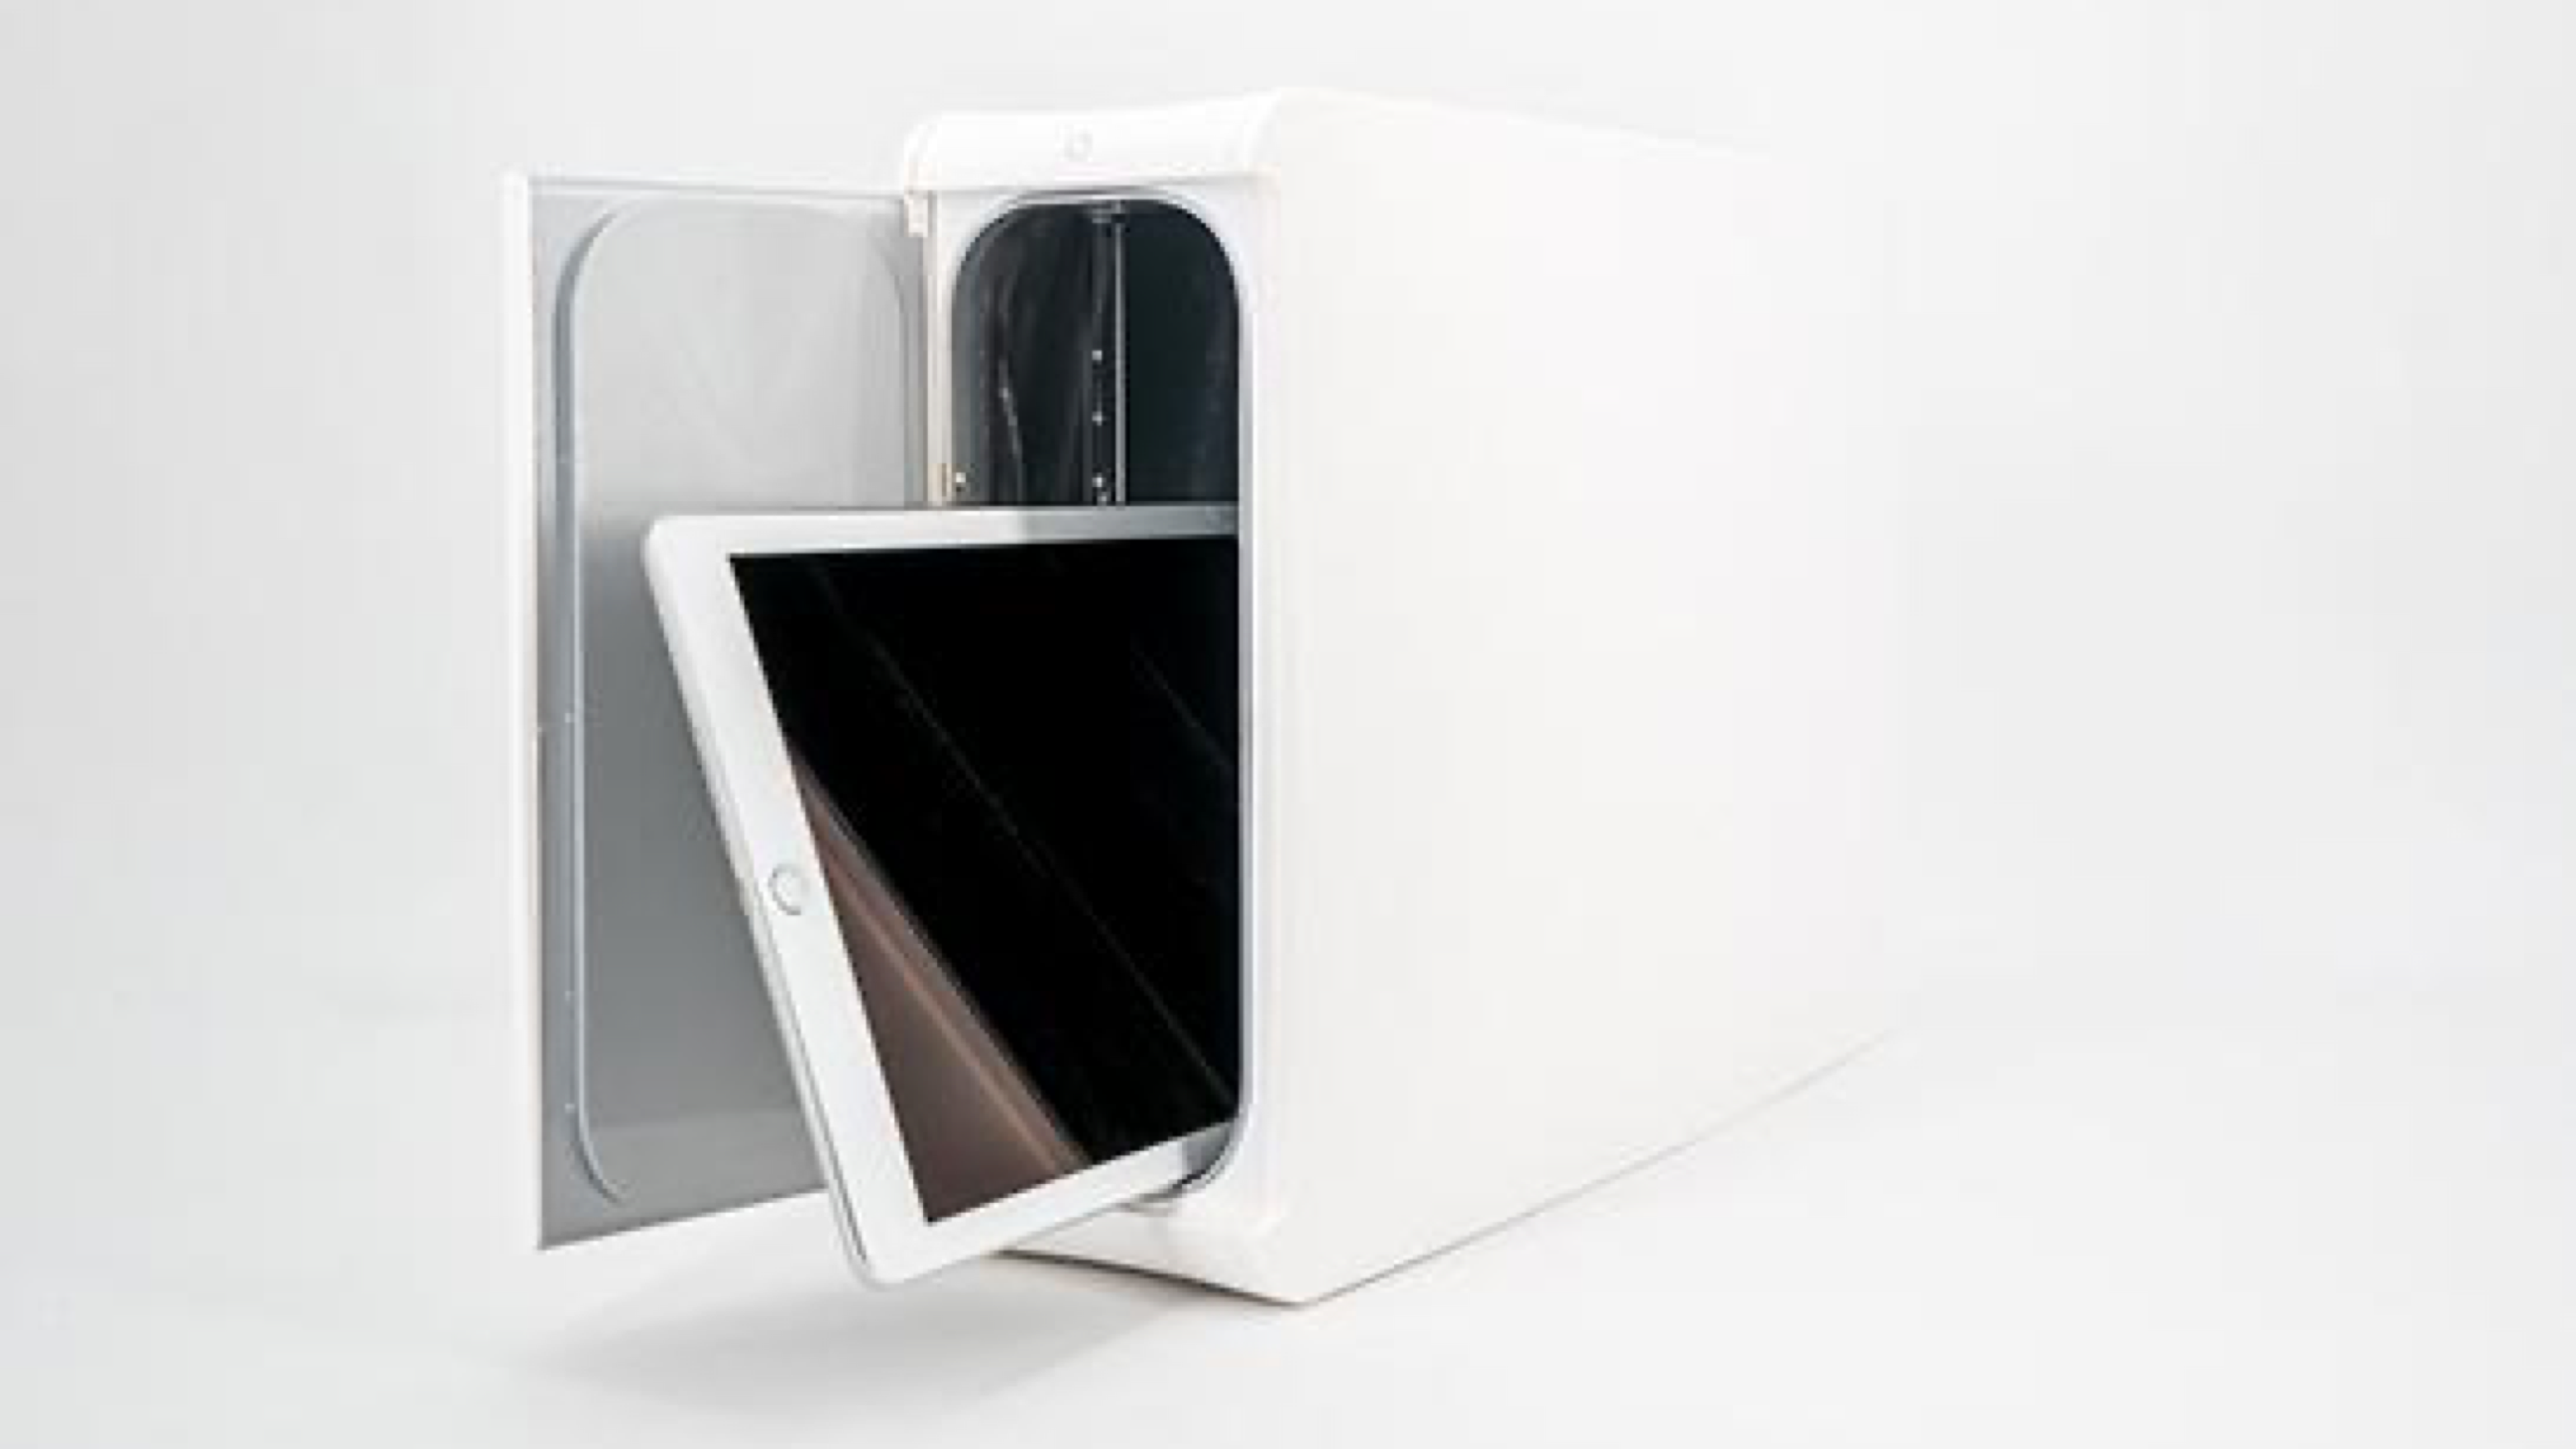 uv sanitizer box to clean phones, tablets, keys, wallet, tv remotes